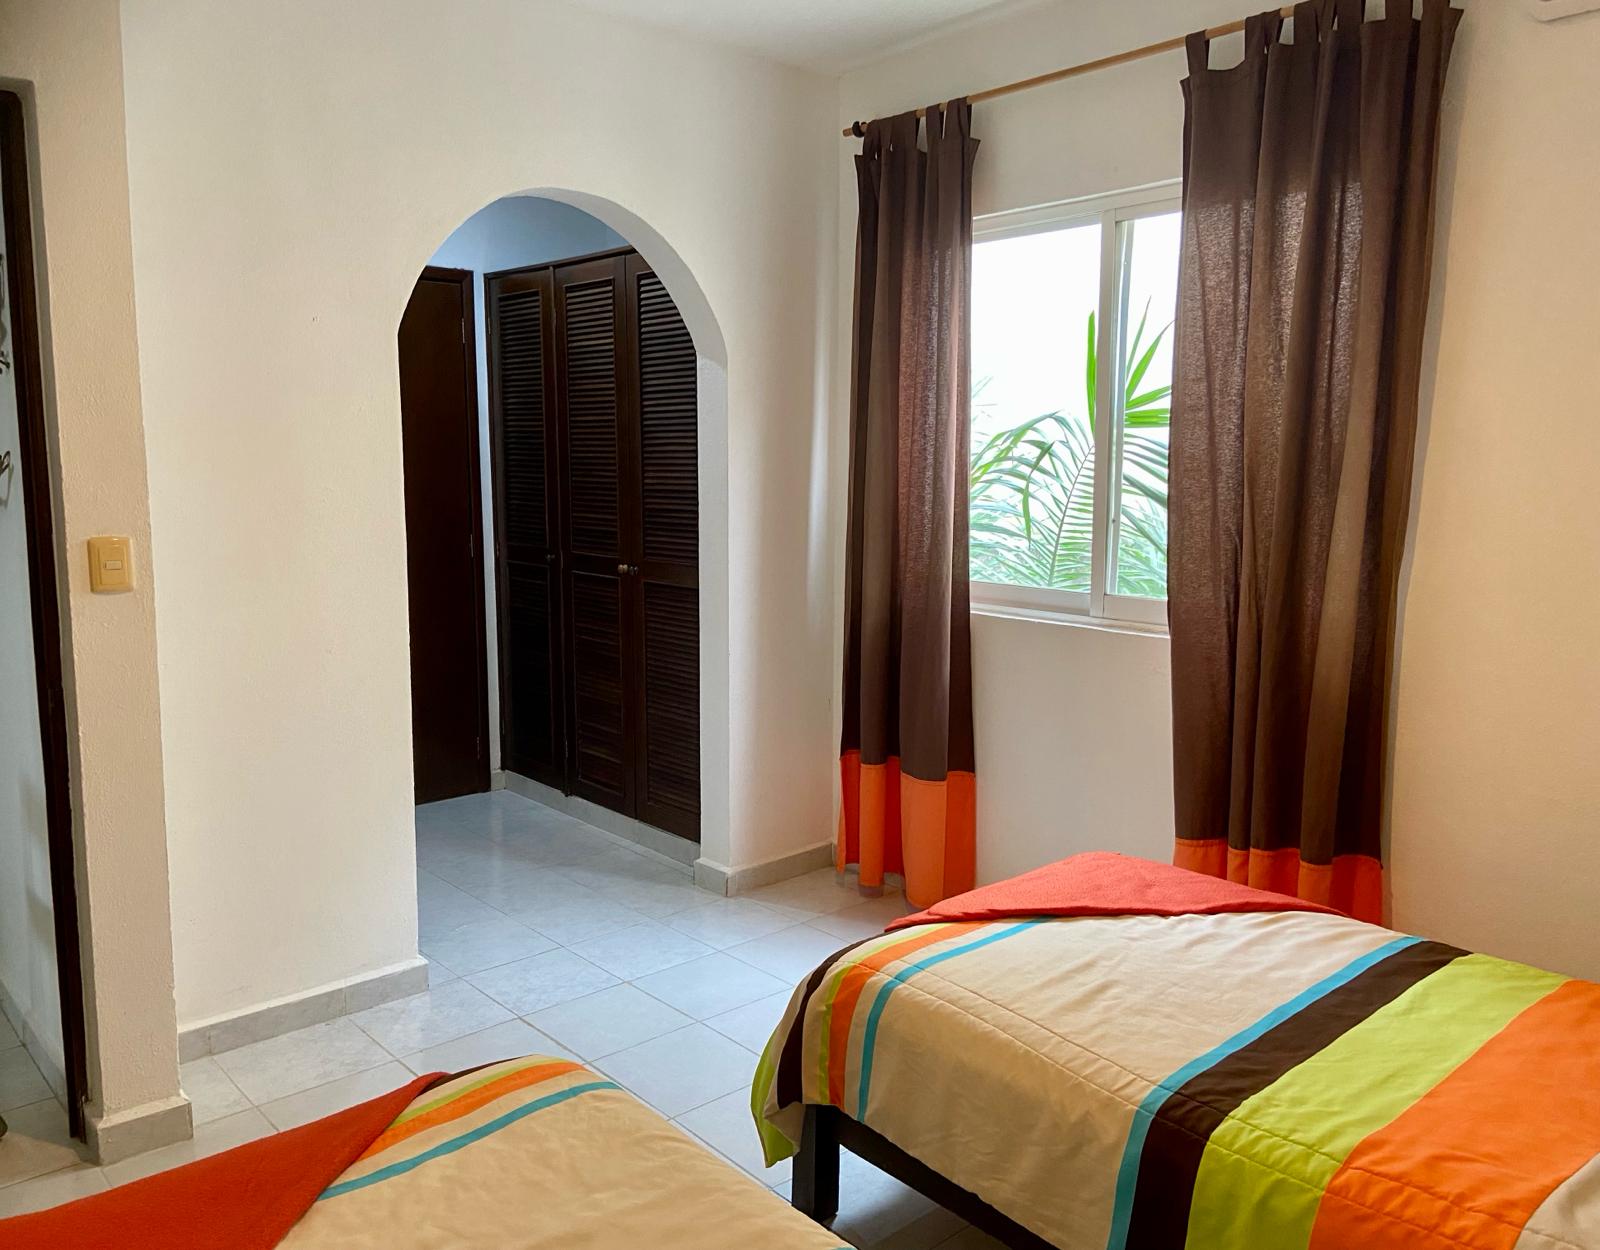 h playa del carmen real estate condo gaviotas 2first floor guest´s bedroom closet